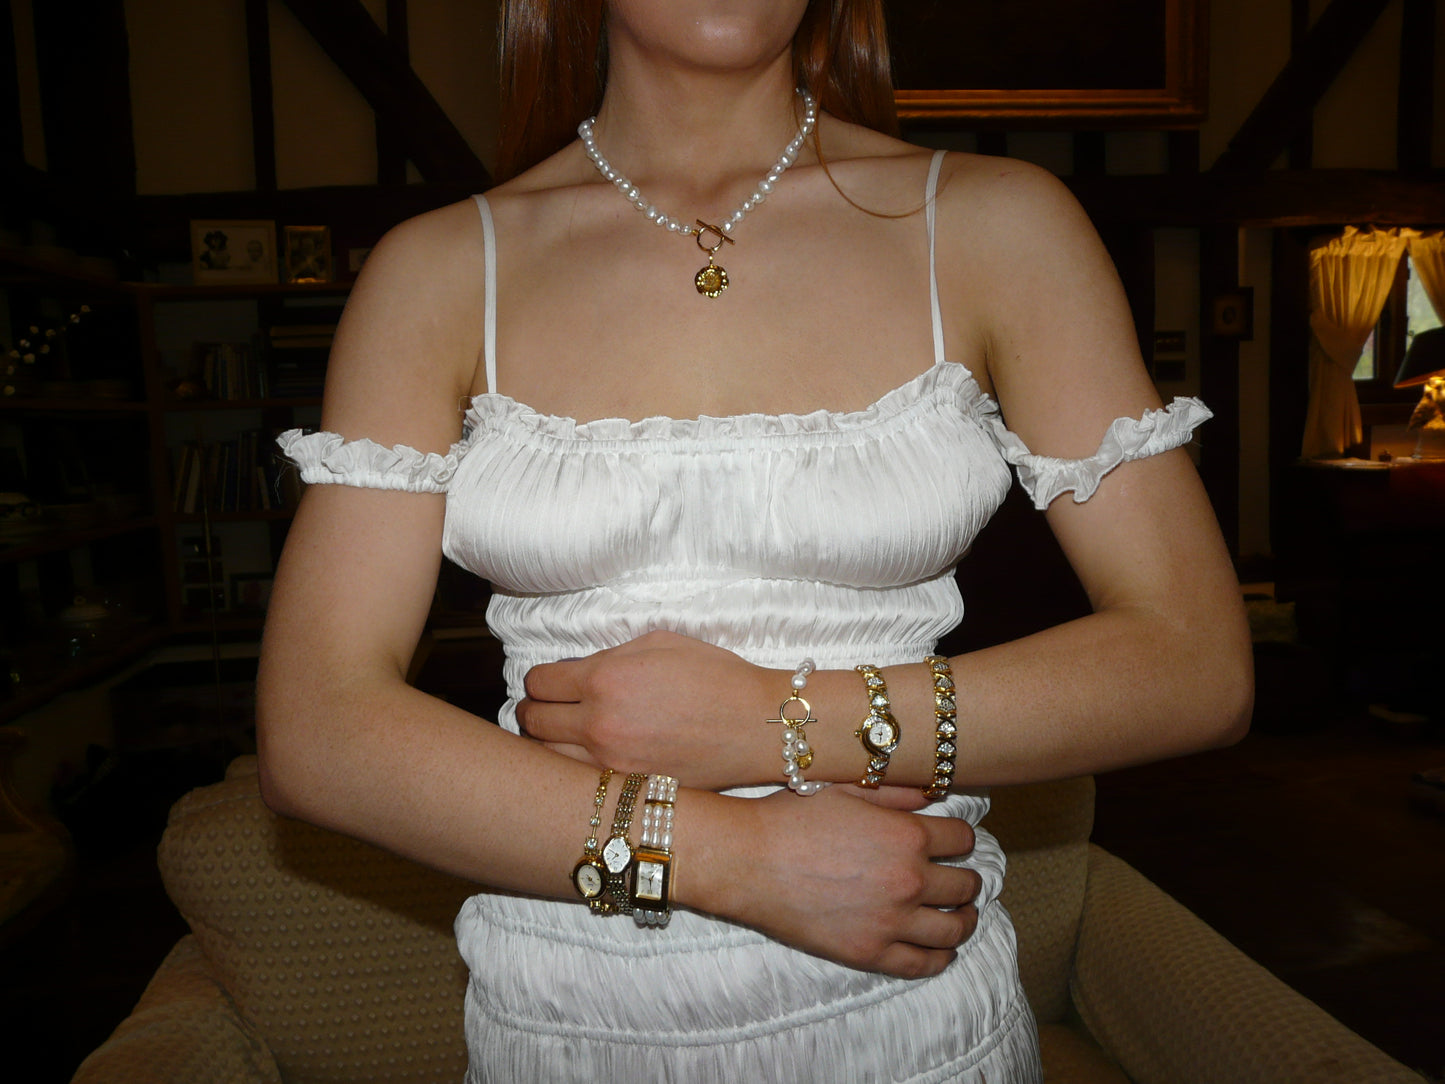 The Cordelia Watch & Bracelet Set